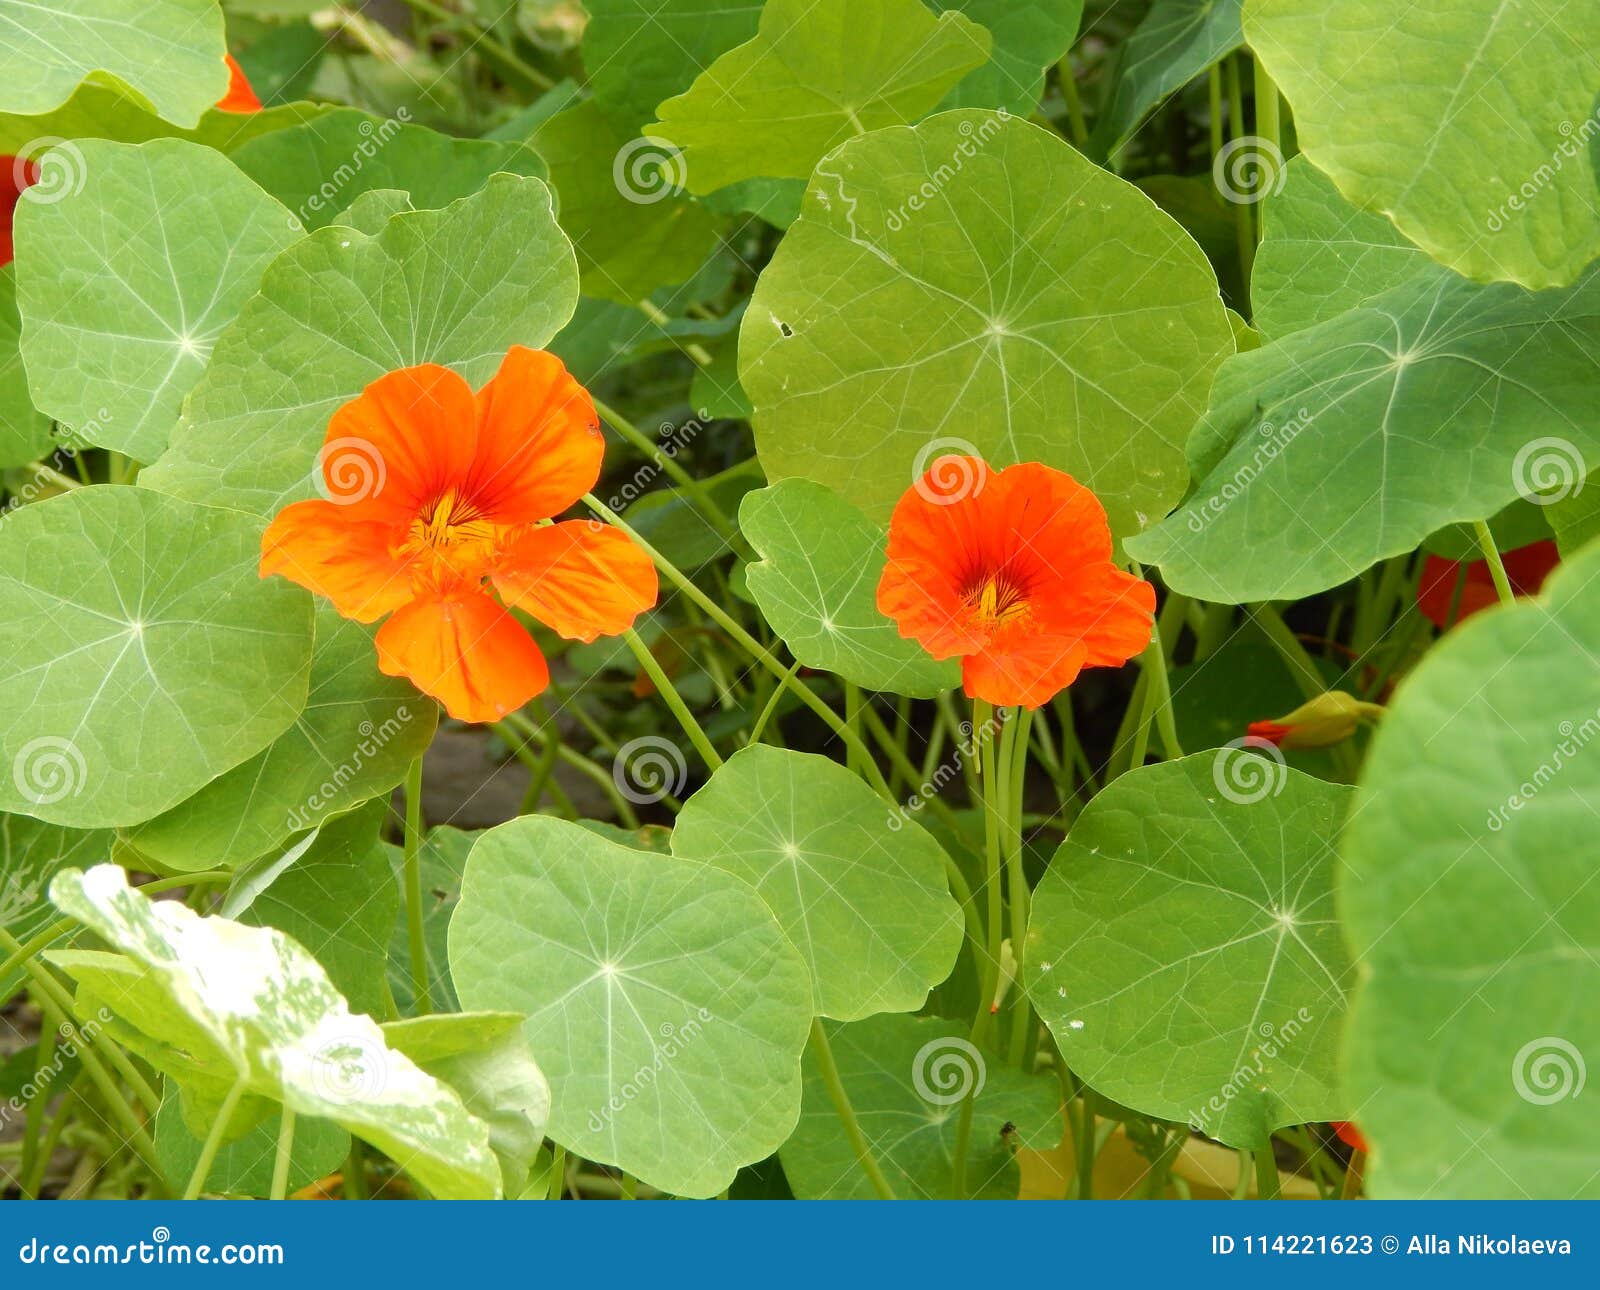 Plant Flower Nasturtium With Orange Flowers Stock Image Image Of Summer Orange 114221623